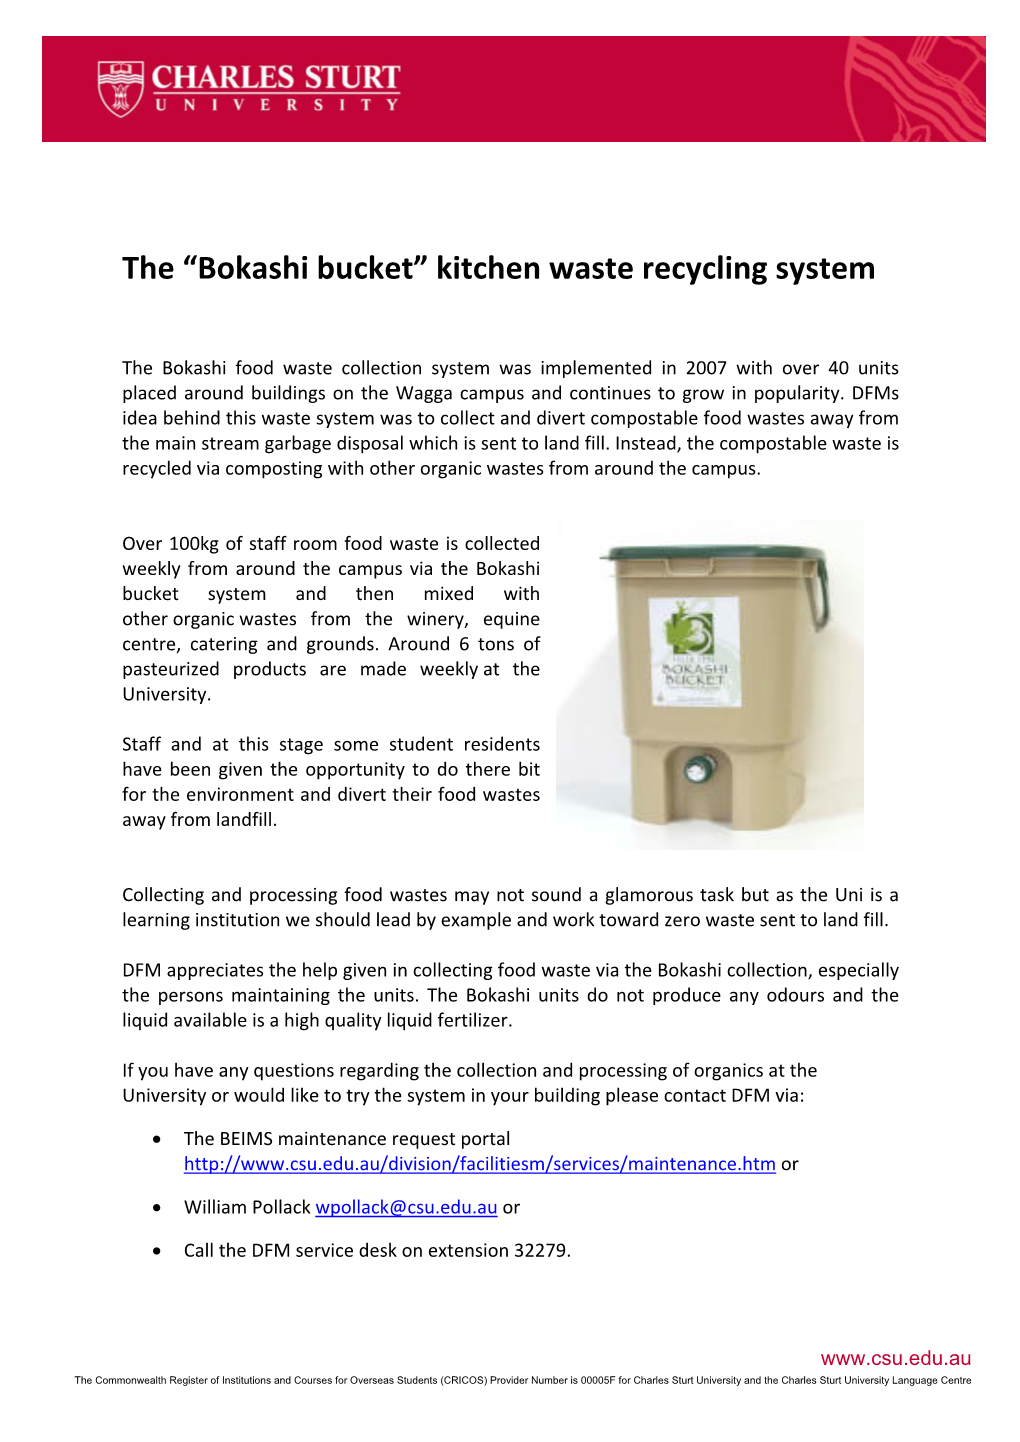 The “Bokashi Bucket” Kitchen Waste Recycling System